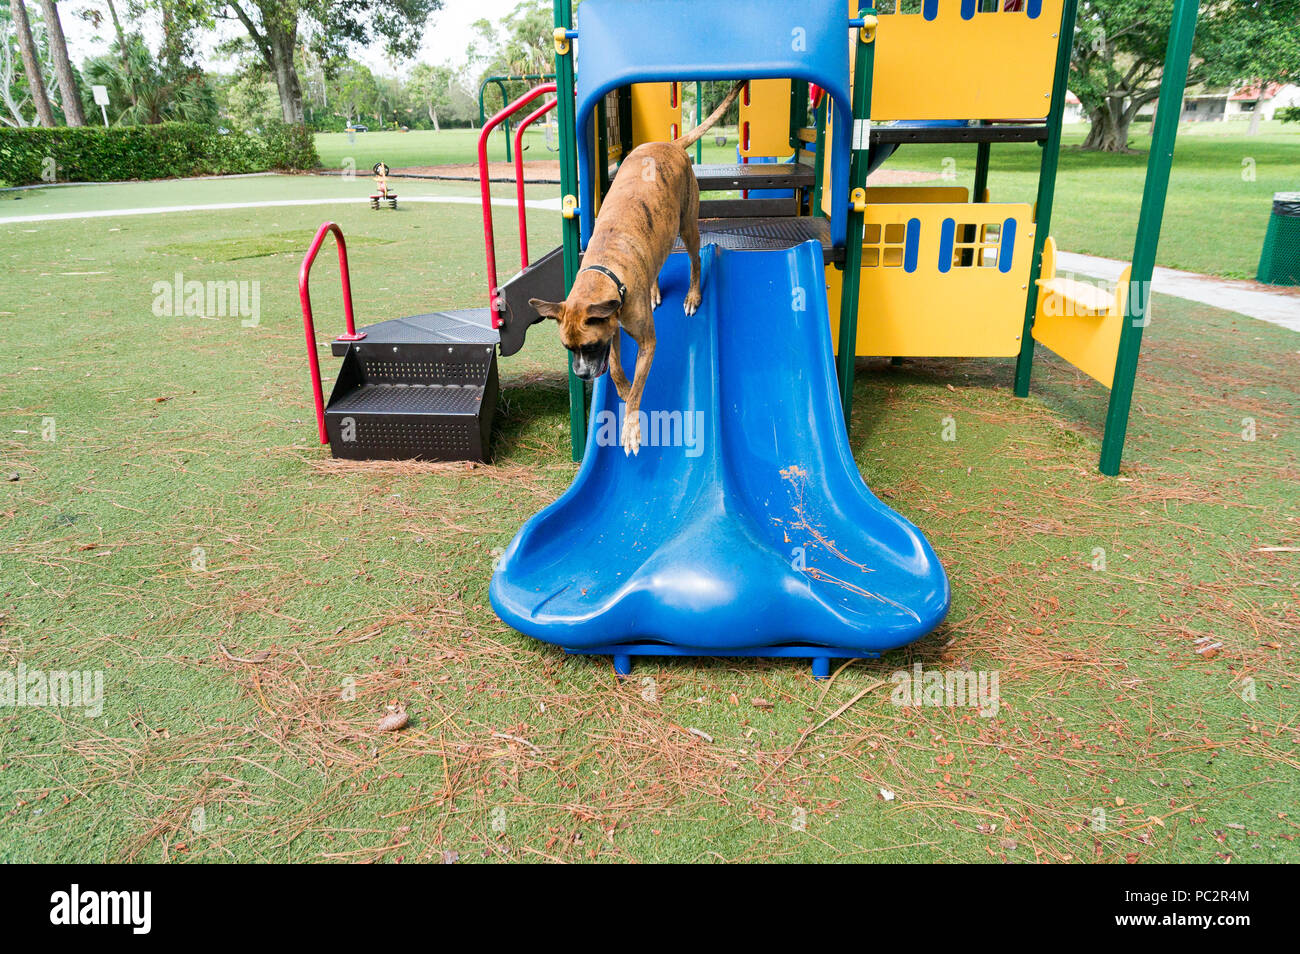 https://c8.alamy.com/comp/PC2R4M/dog-on-a-school-playground-PC2R4M.jpg